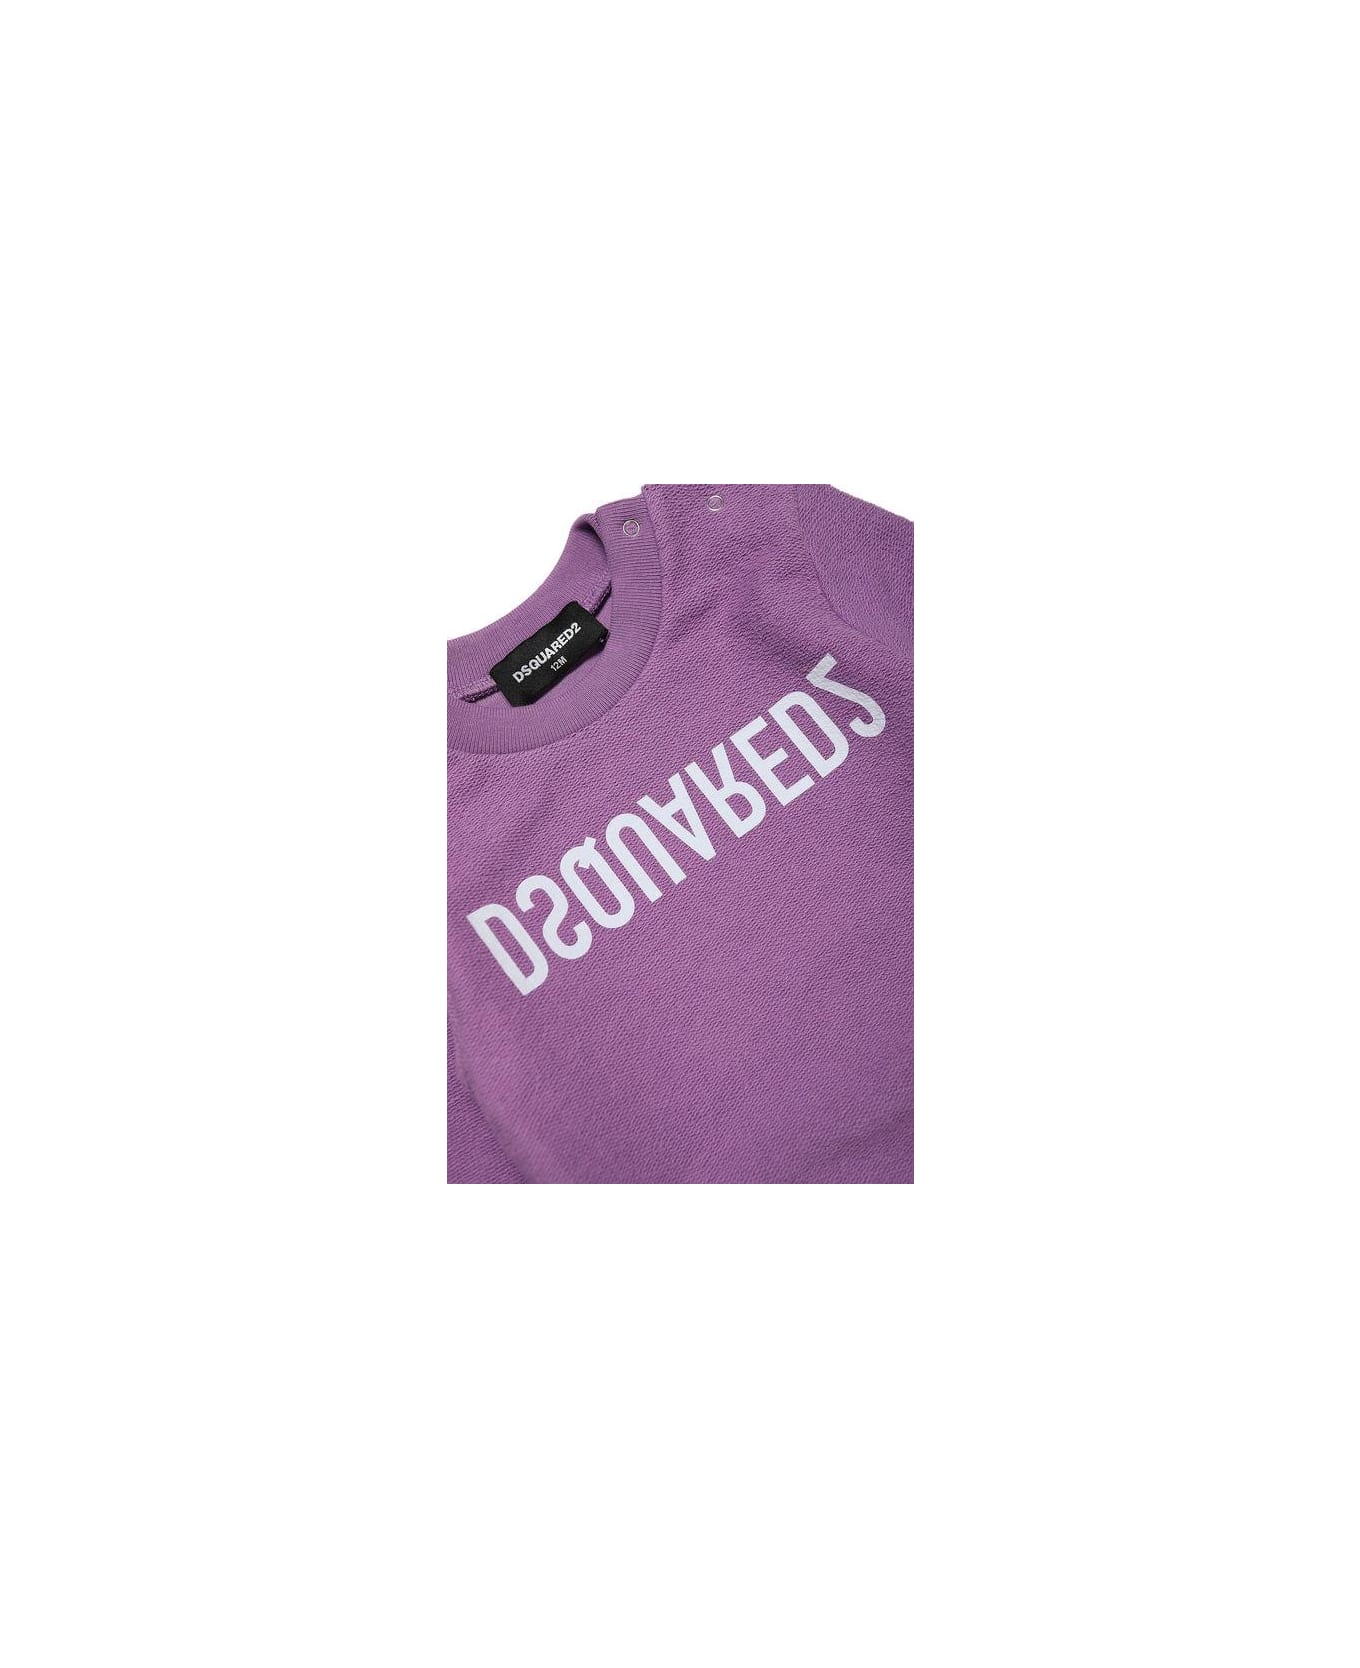 Dsquared2 Sweatshirt With Print - Wisteria